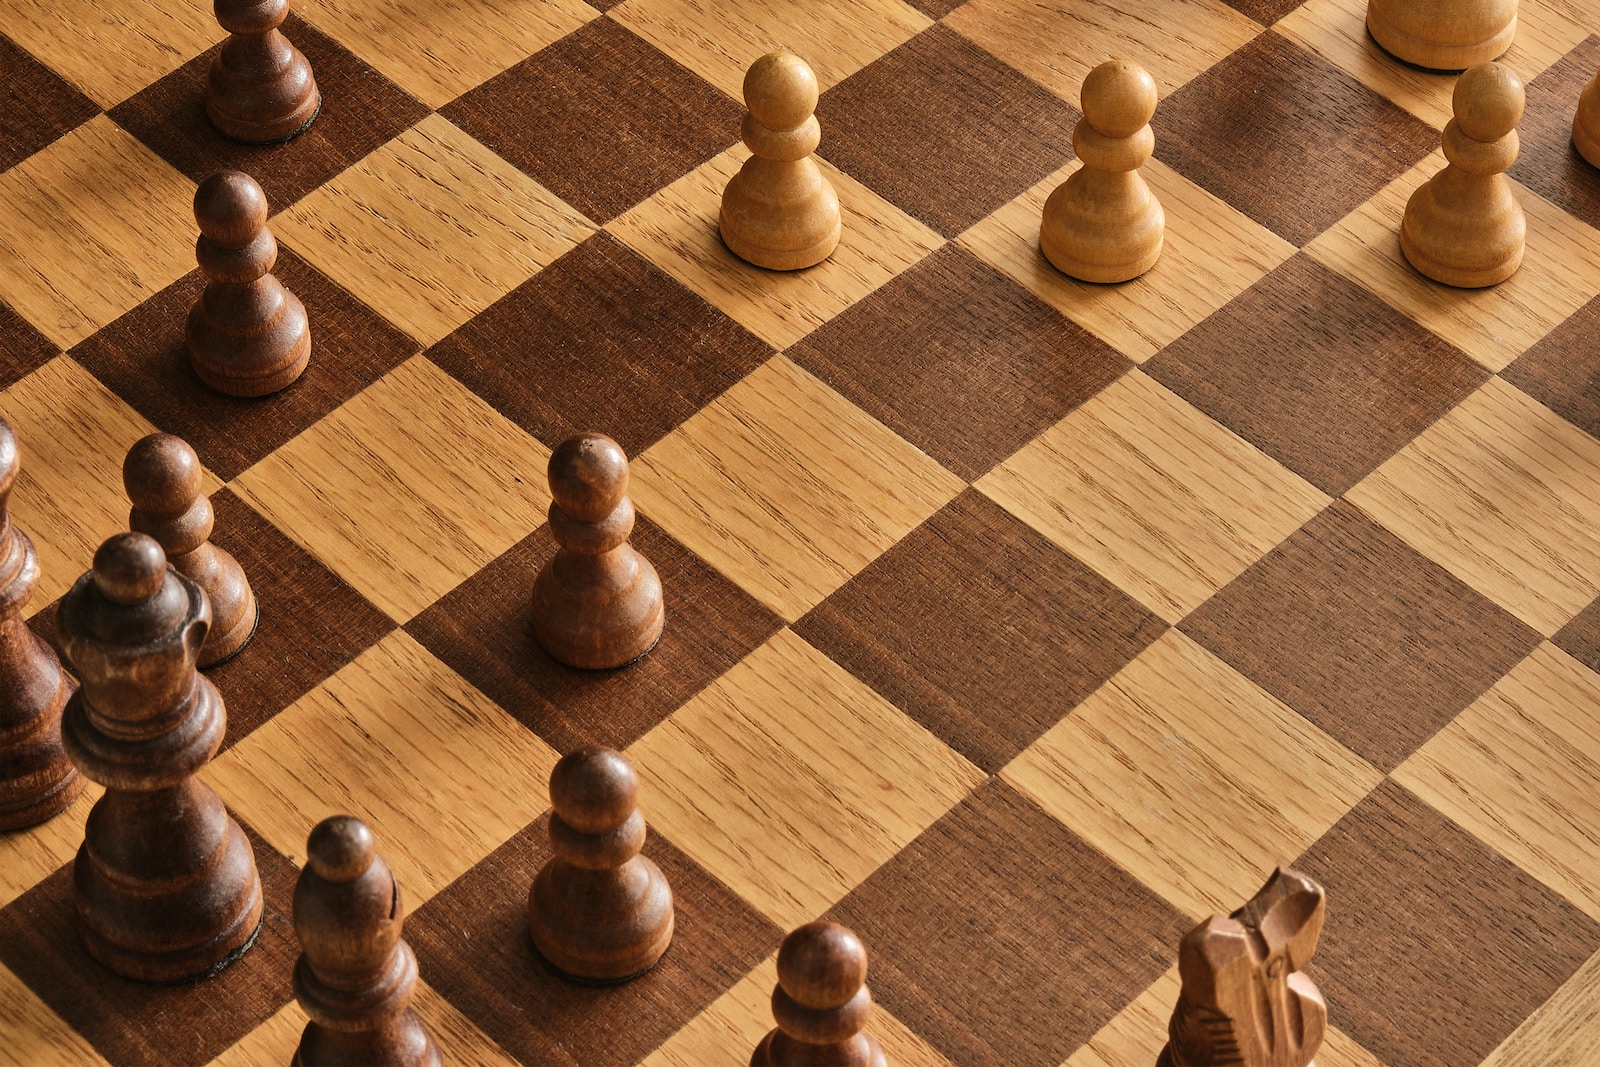 Chess: The Grandmaster’s Battle